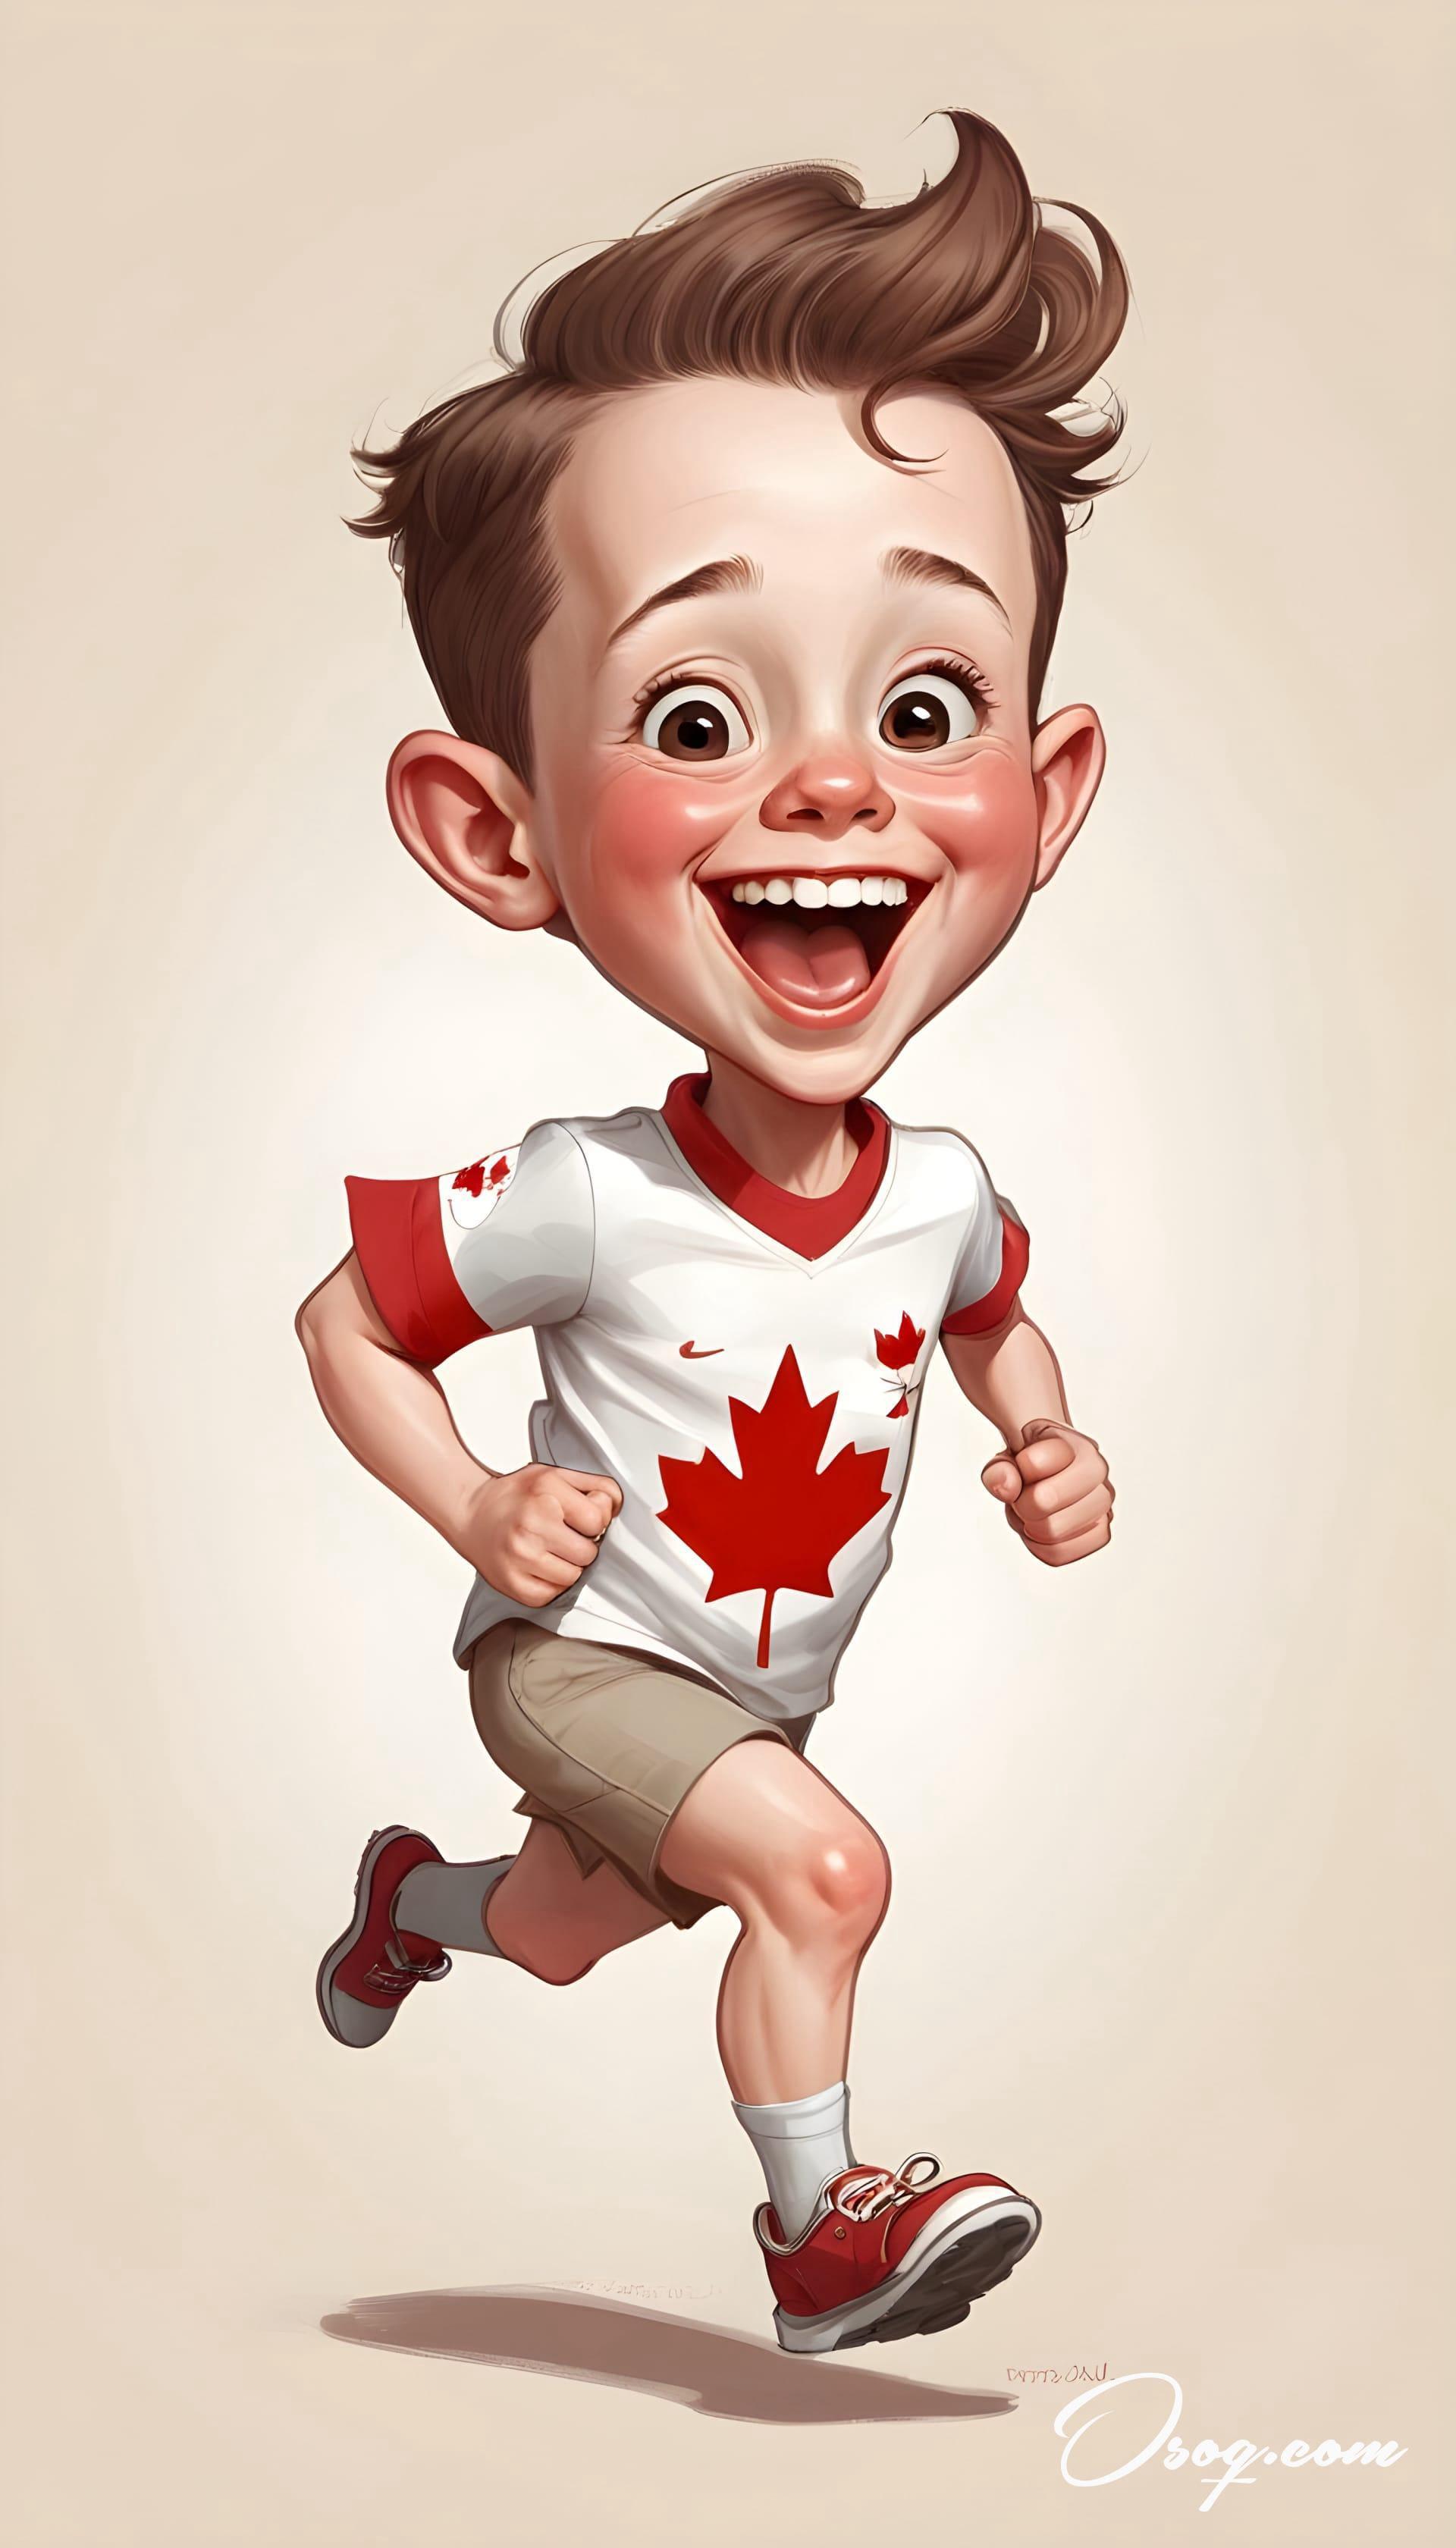 Canadian cartoon 09